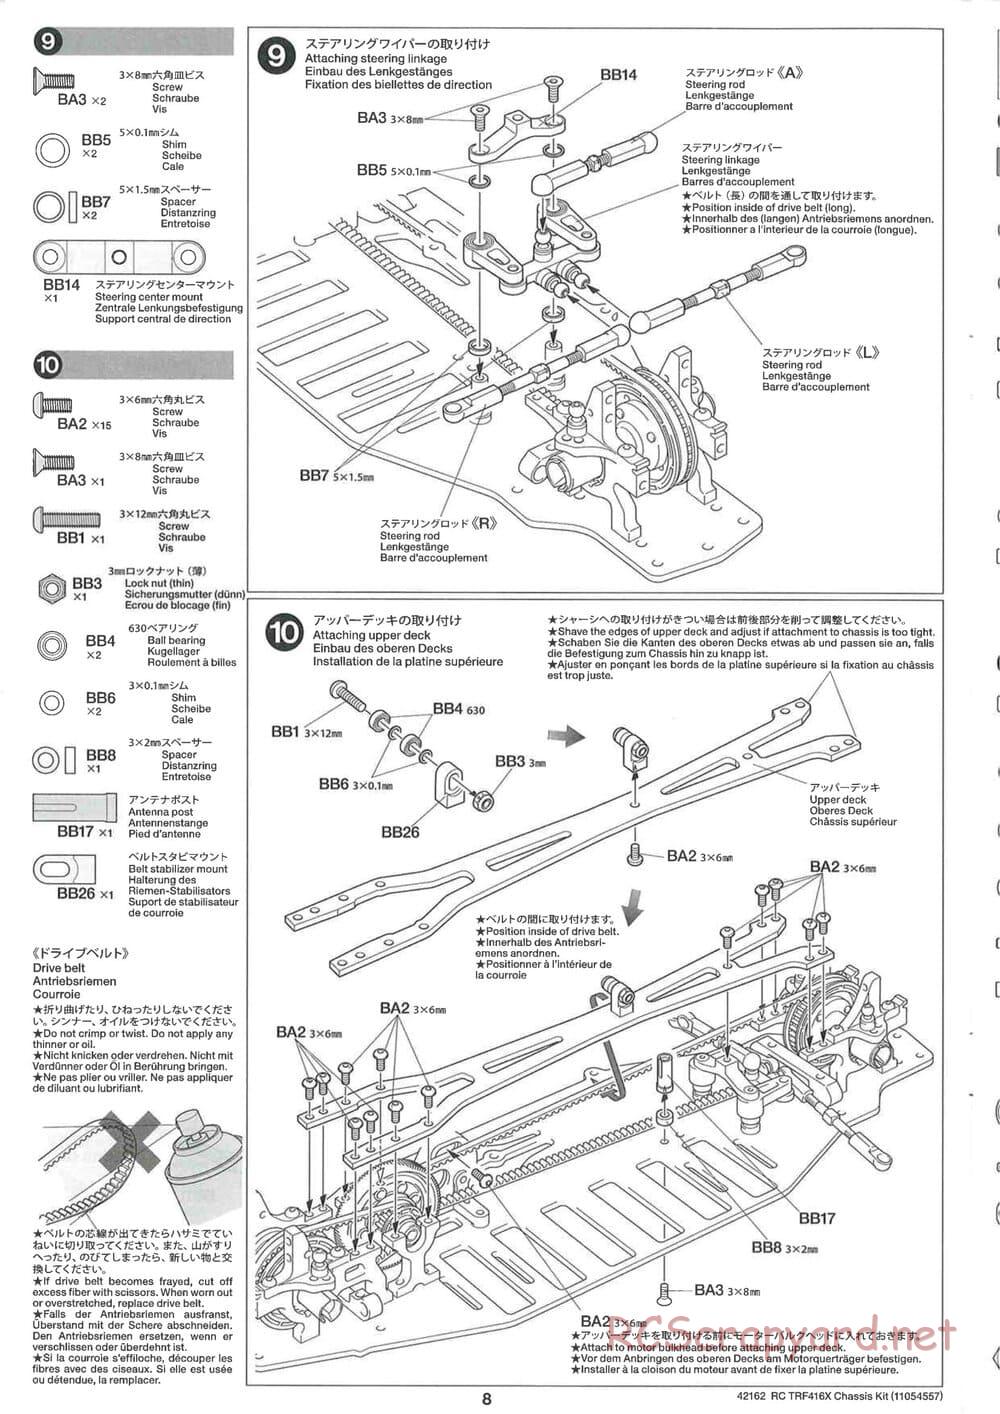 Tamiya - TRF416X Chassis - Manual - Page 8